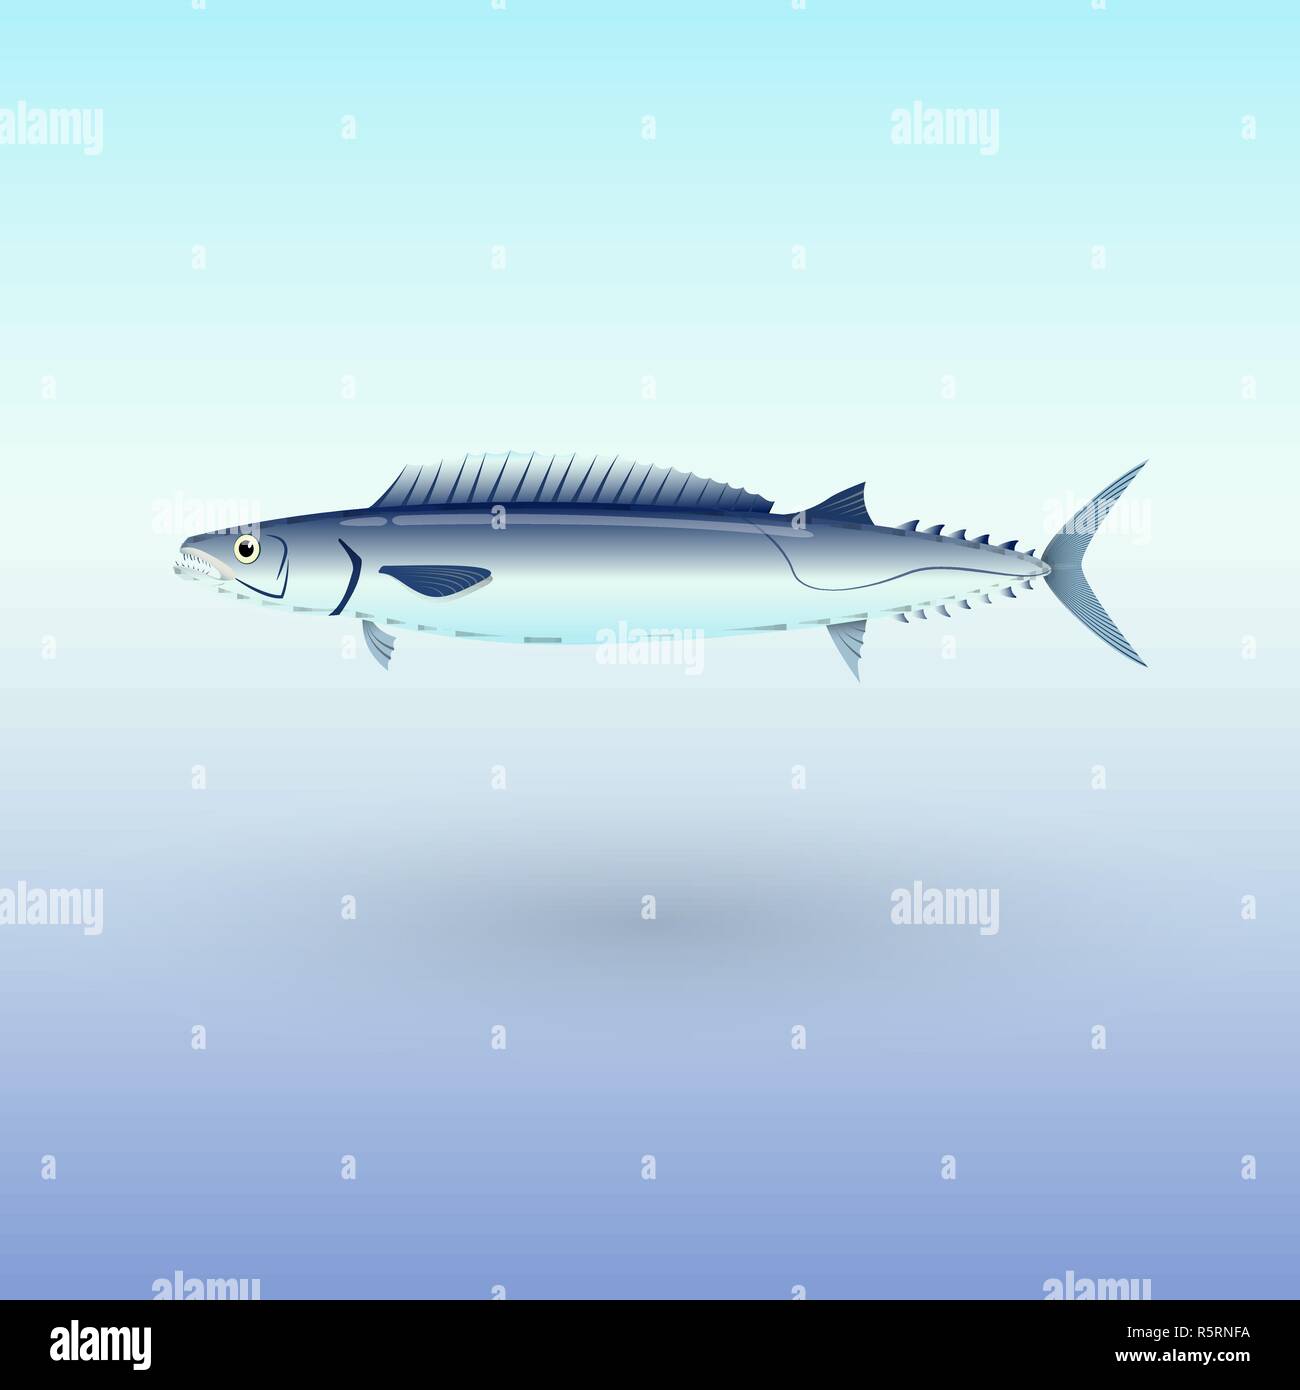 Barracouta fish illustration Stock Vector